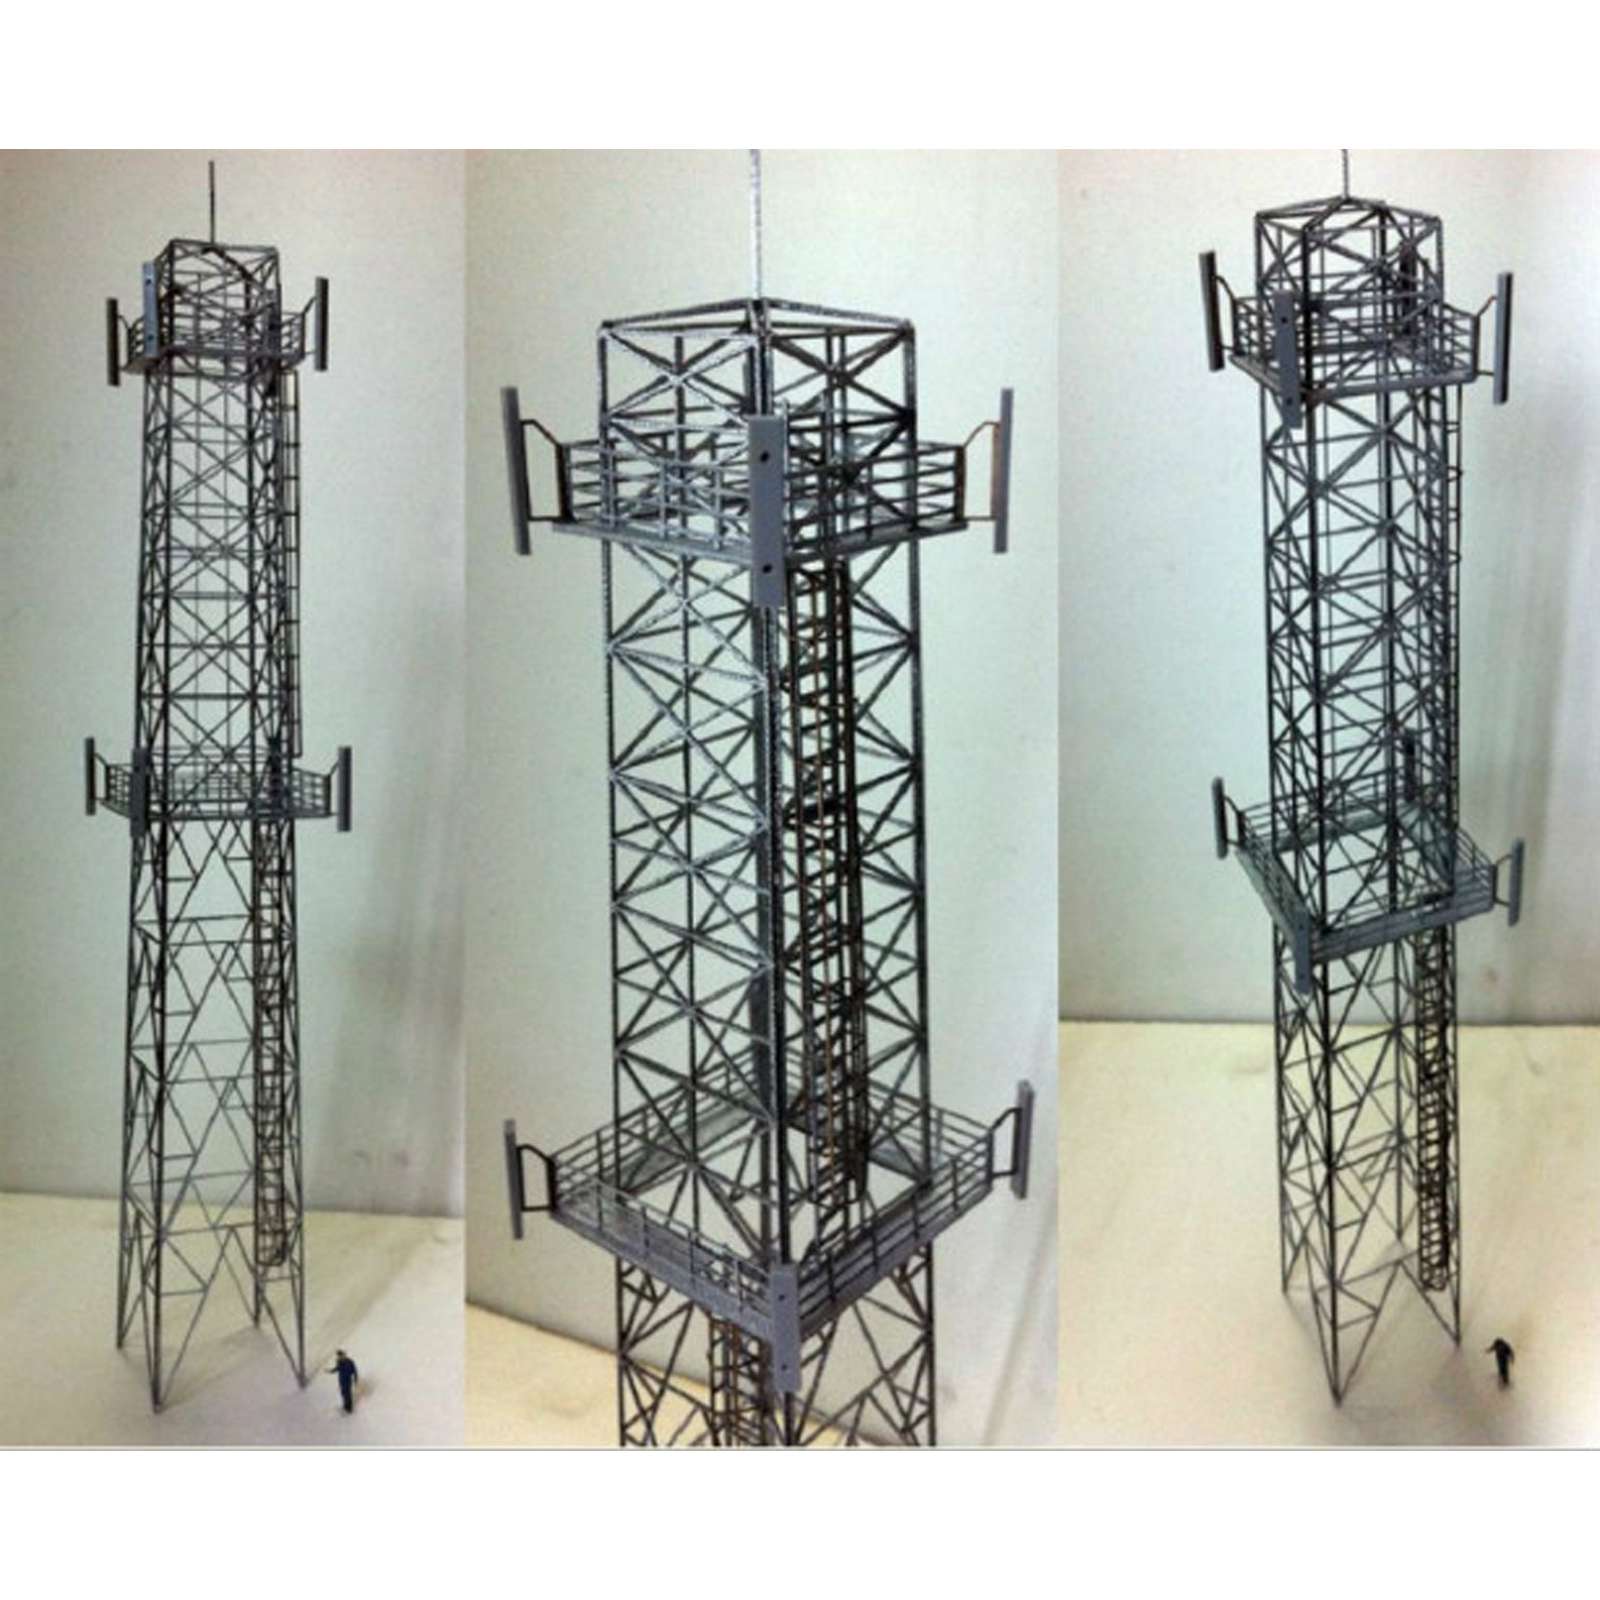 1:87 HO Scale Model Train Railway Communication Tower - myvarietyvault23